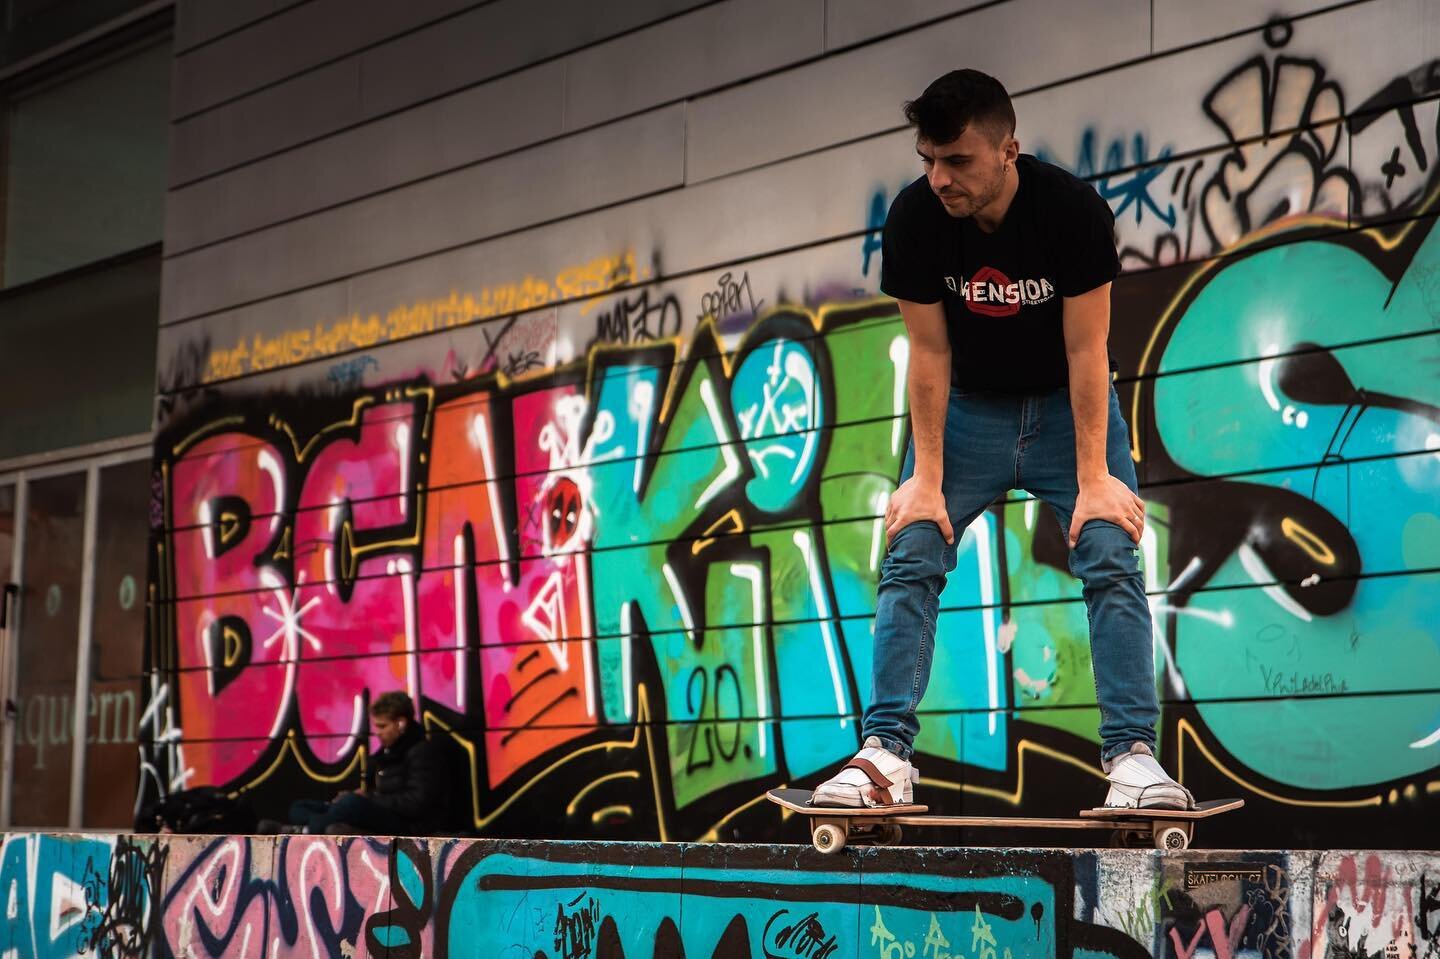 In progress 
@jordiscofield 
🎥@jinxofilms
.
.
.
.
.
.

#skatelife #skate #skatestyle #skatelifestyle #street #streetboard #streetboarding #snakeboard #waveboard #ripstick #snakeboarding #skatevibes #skatepark #grafitti #graffitiart #barcelona #skate